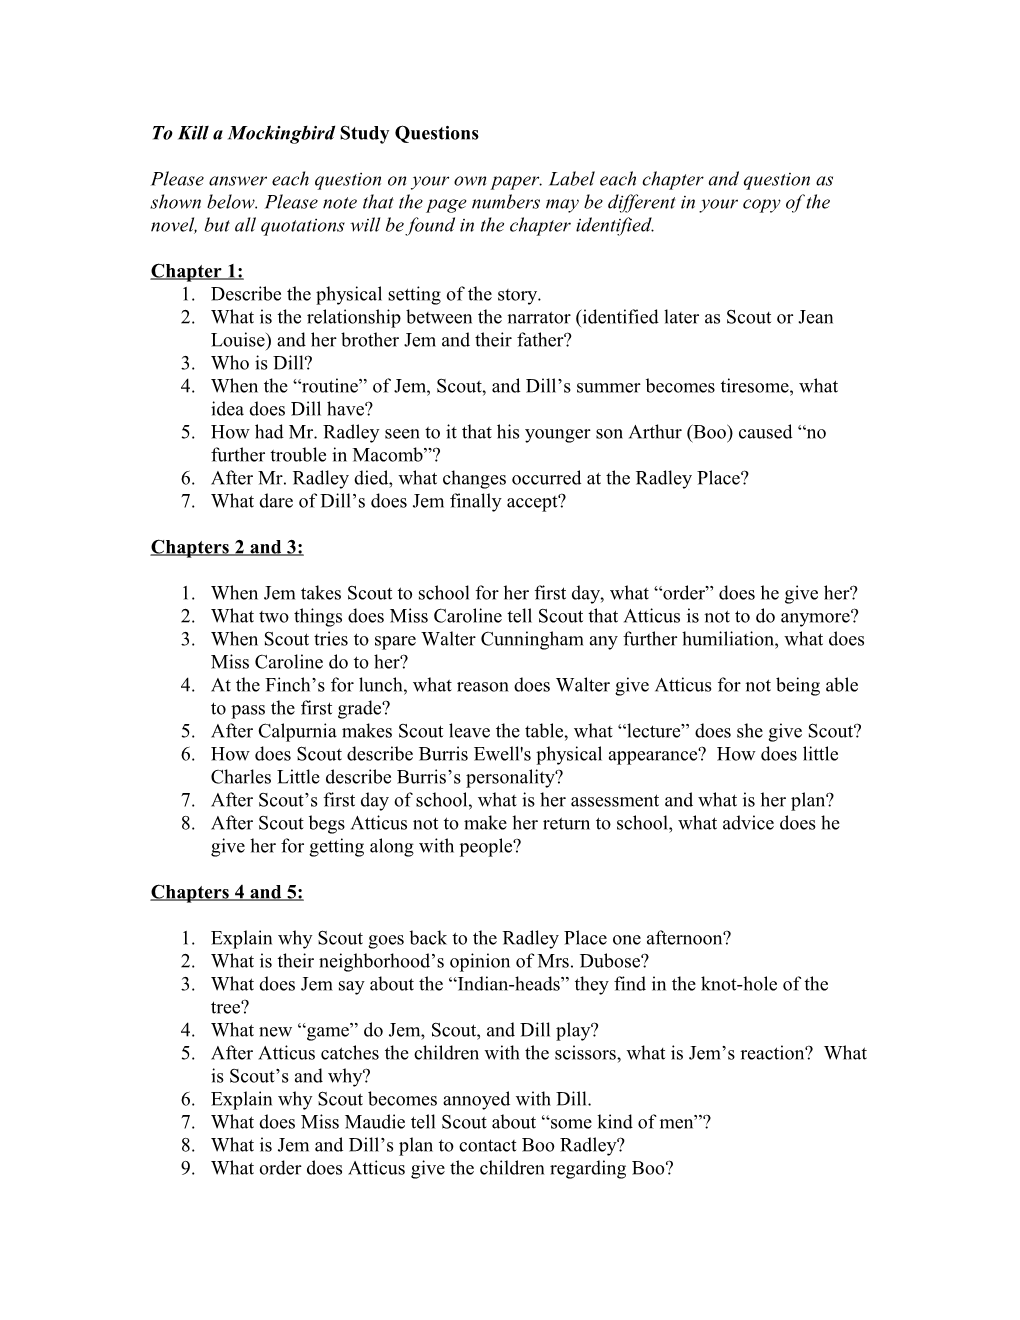 To Kill a Mockingbird Study Questions s1